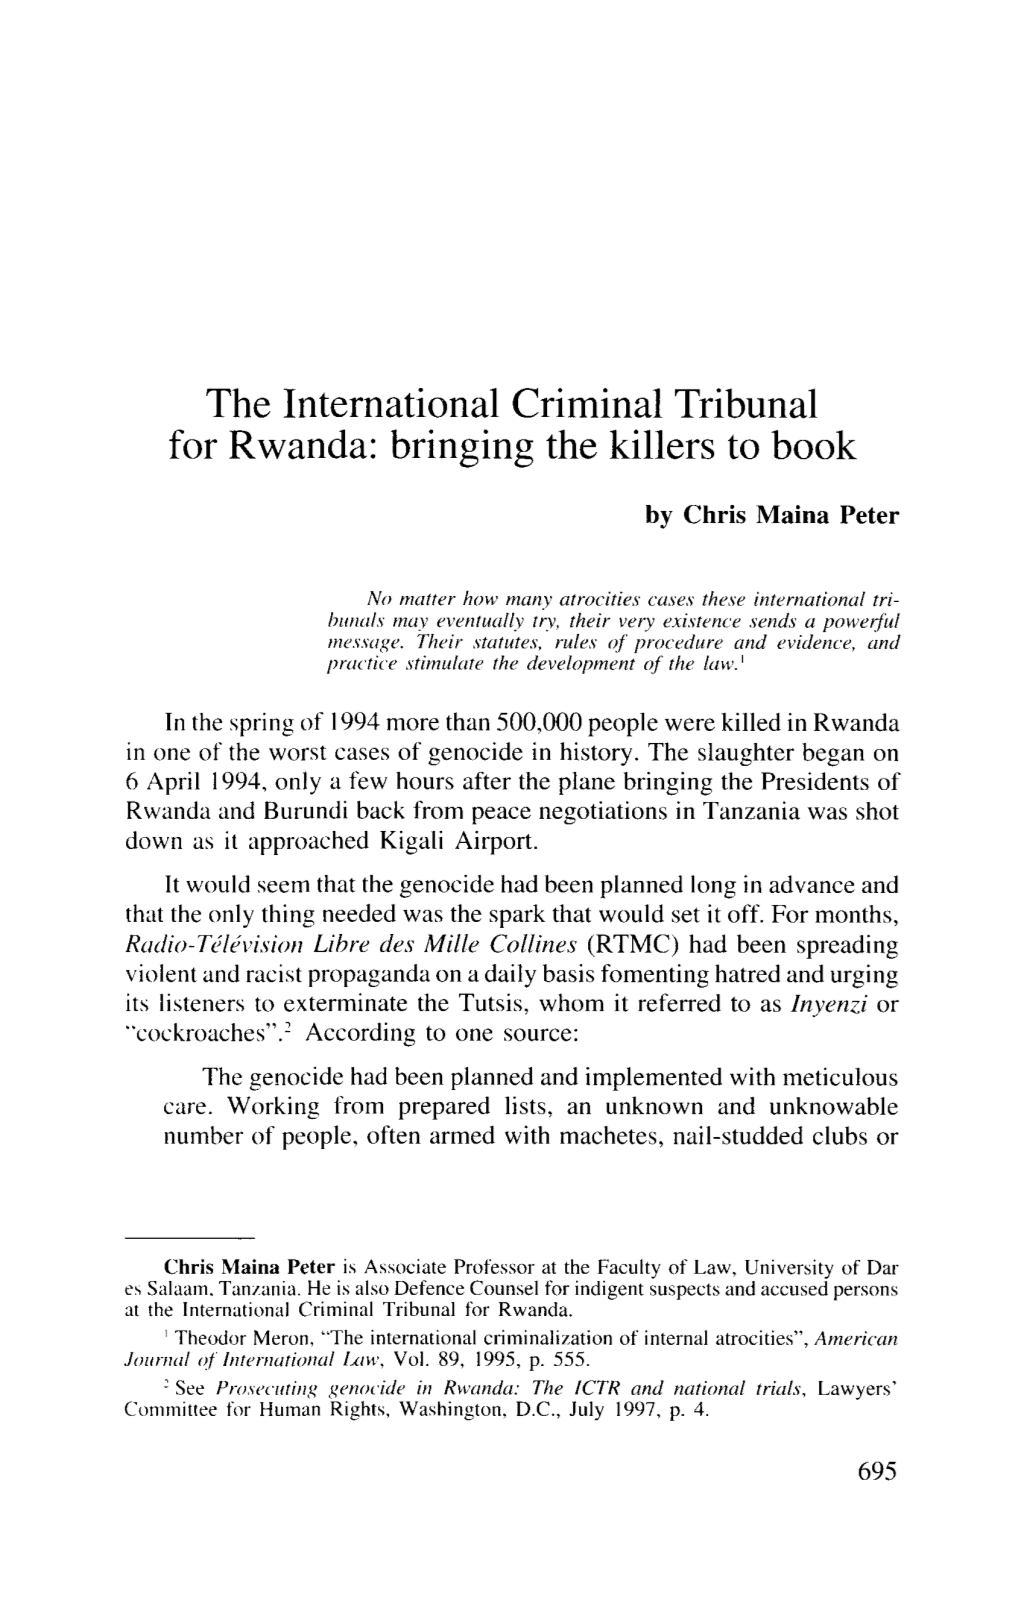 The International Criminal Tribunal for Rwanda: Bringing the Killers to Book